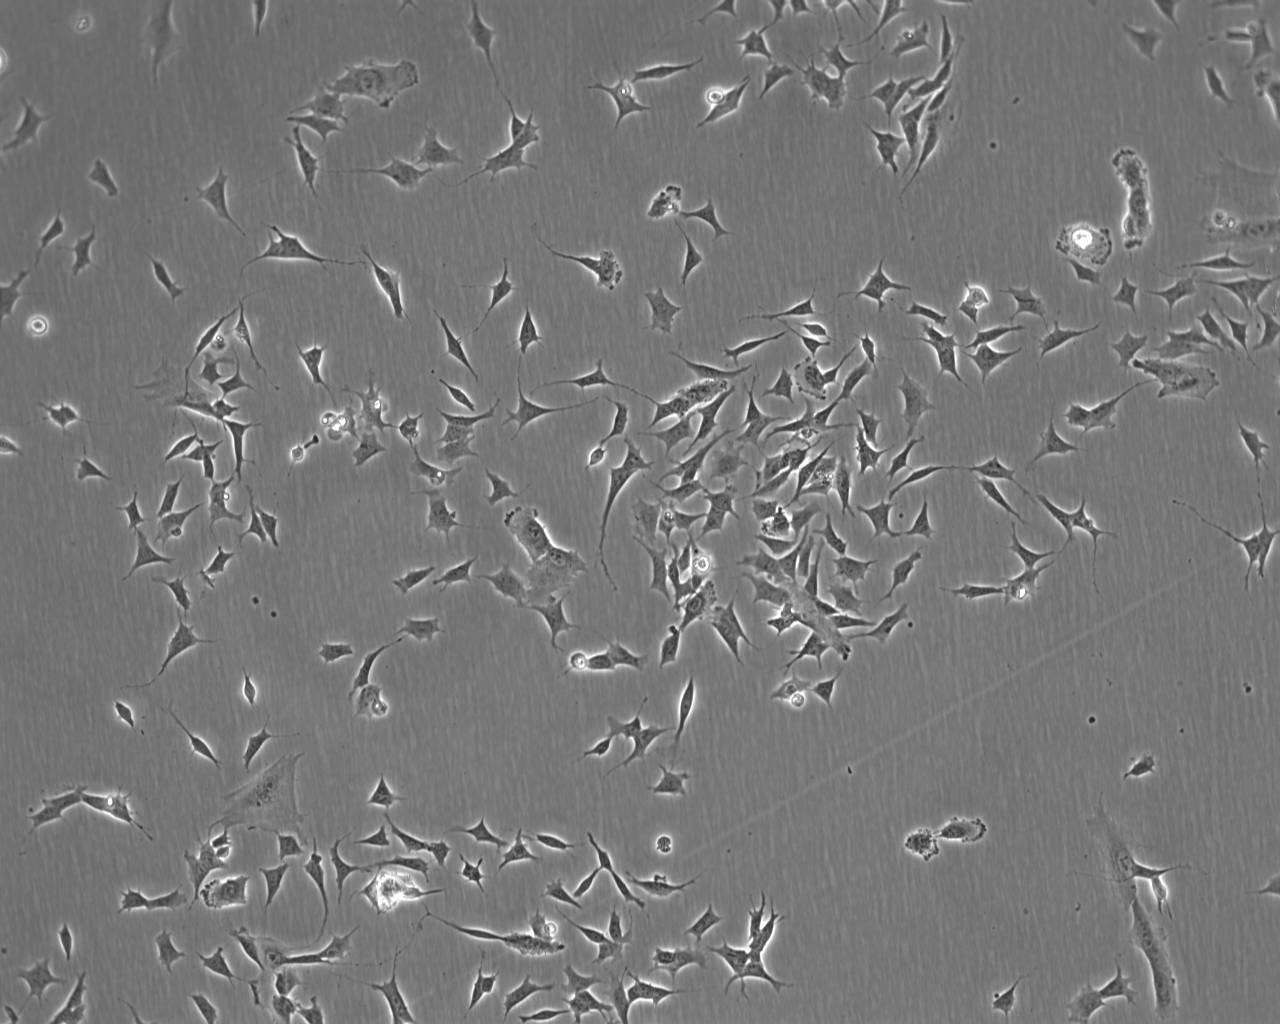 Calu-1 epithelioid cells人肺腺癌细胞系,Calu-1 epithelioid cells